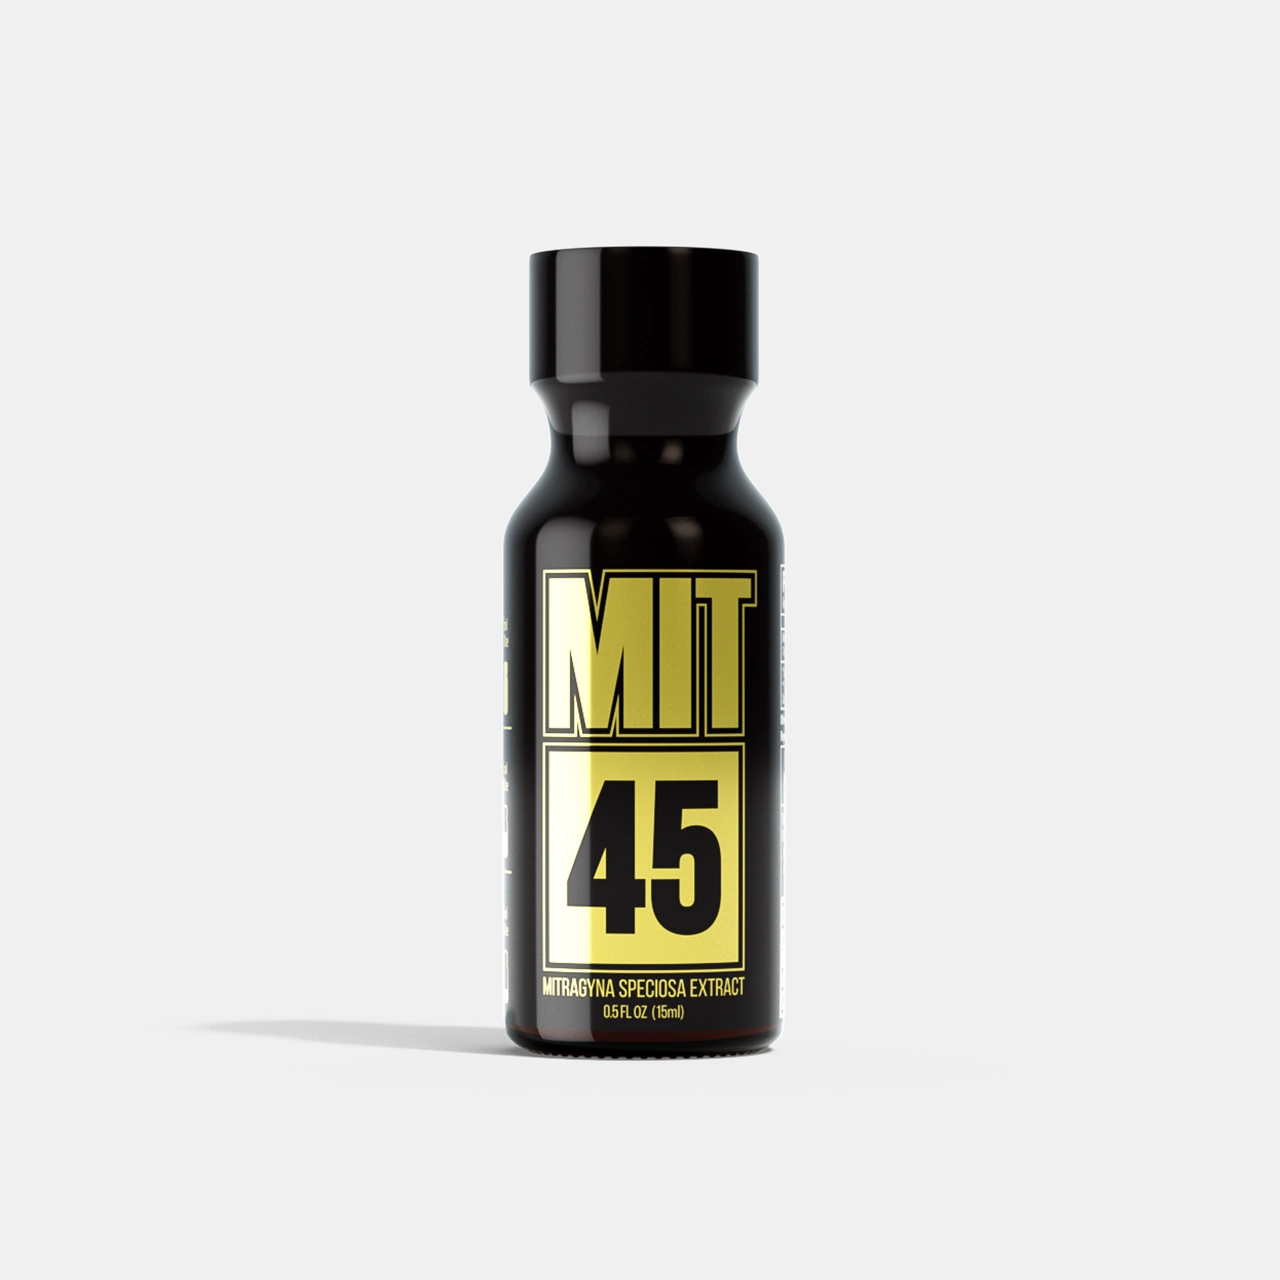 MIT45 Gold bottle product shot